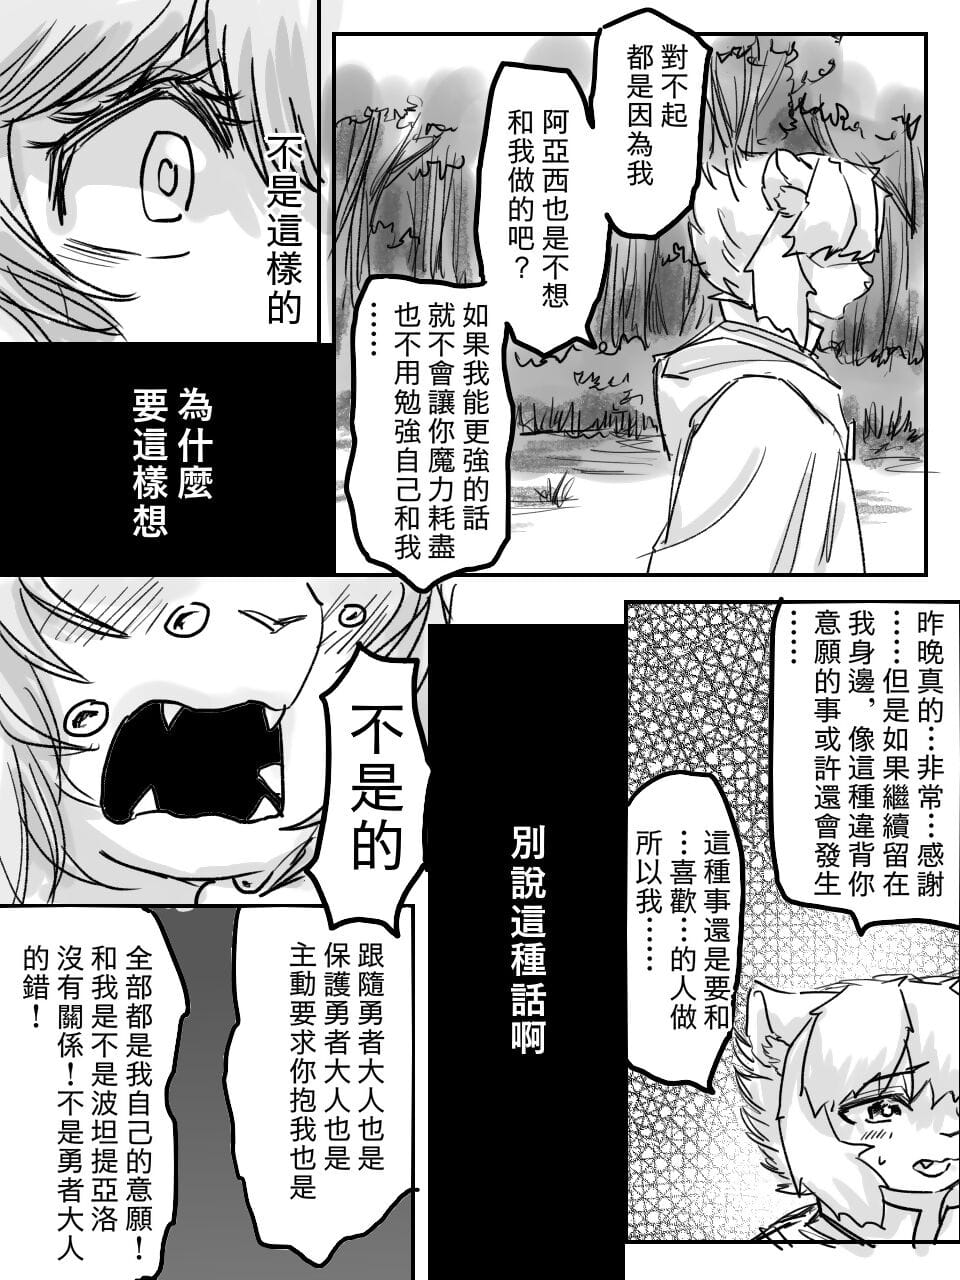 （TEAMMATE）勇者和法师露营的小故事 by:鬼流 - part 3 page 1